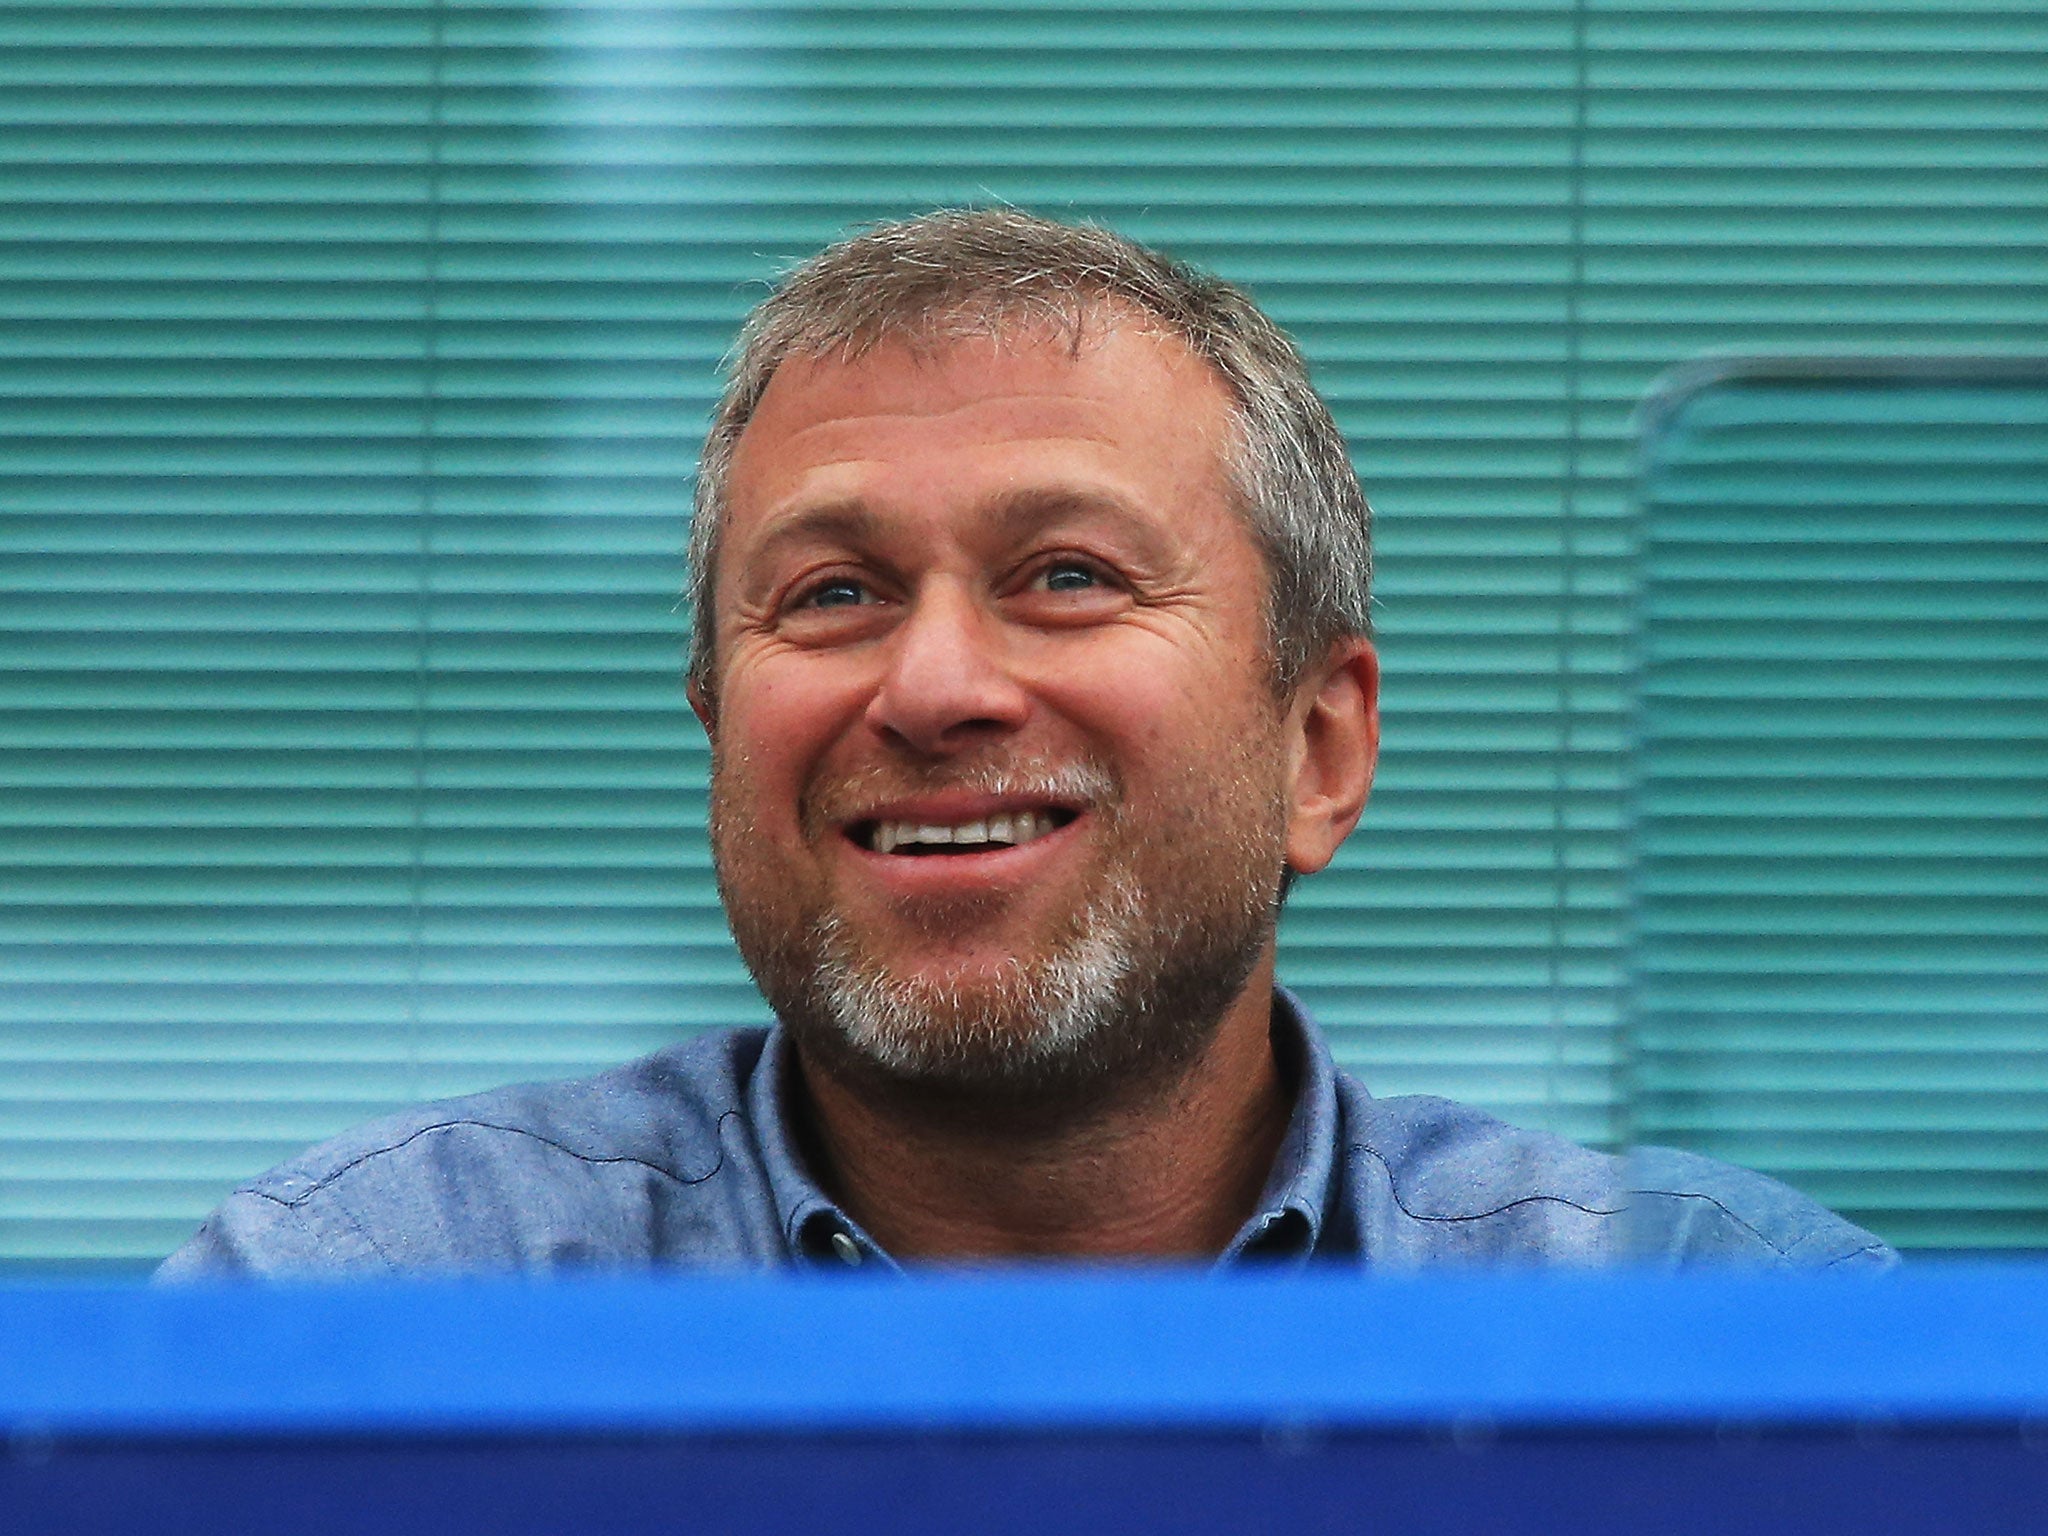 Chelsea owner Roman Abramovich is based in London